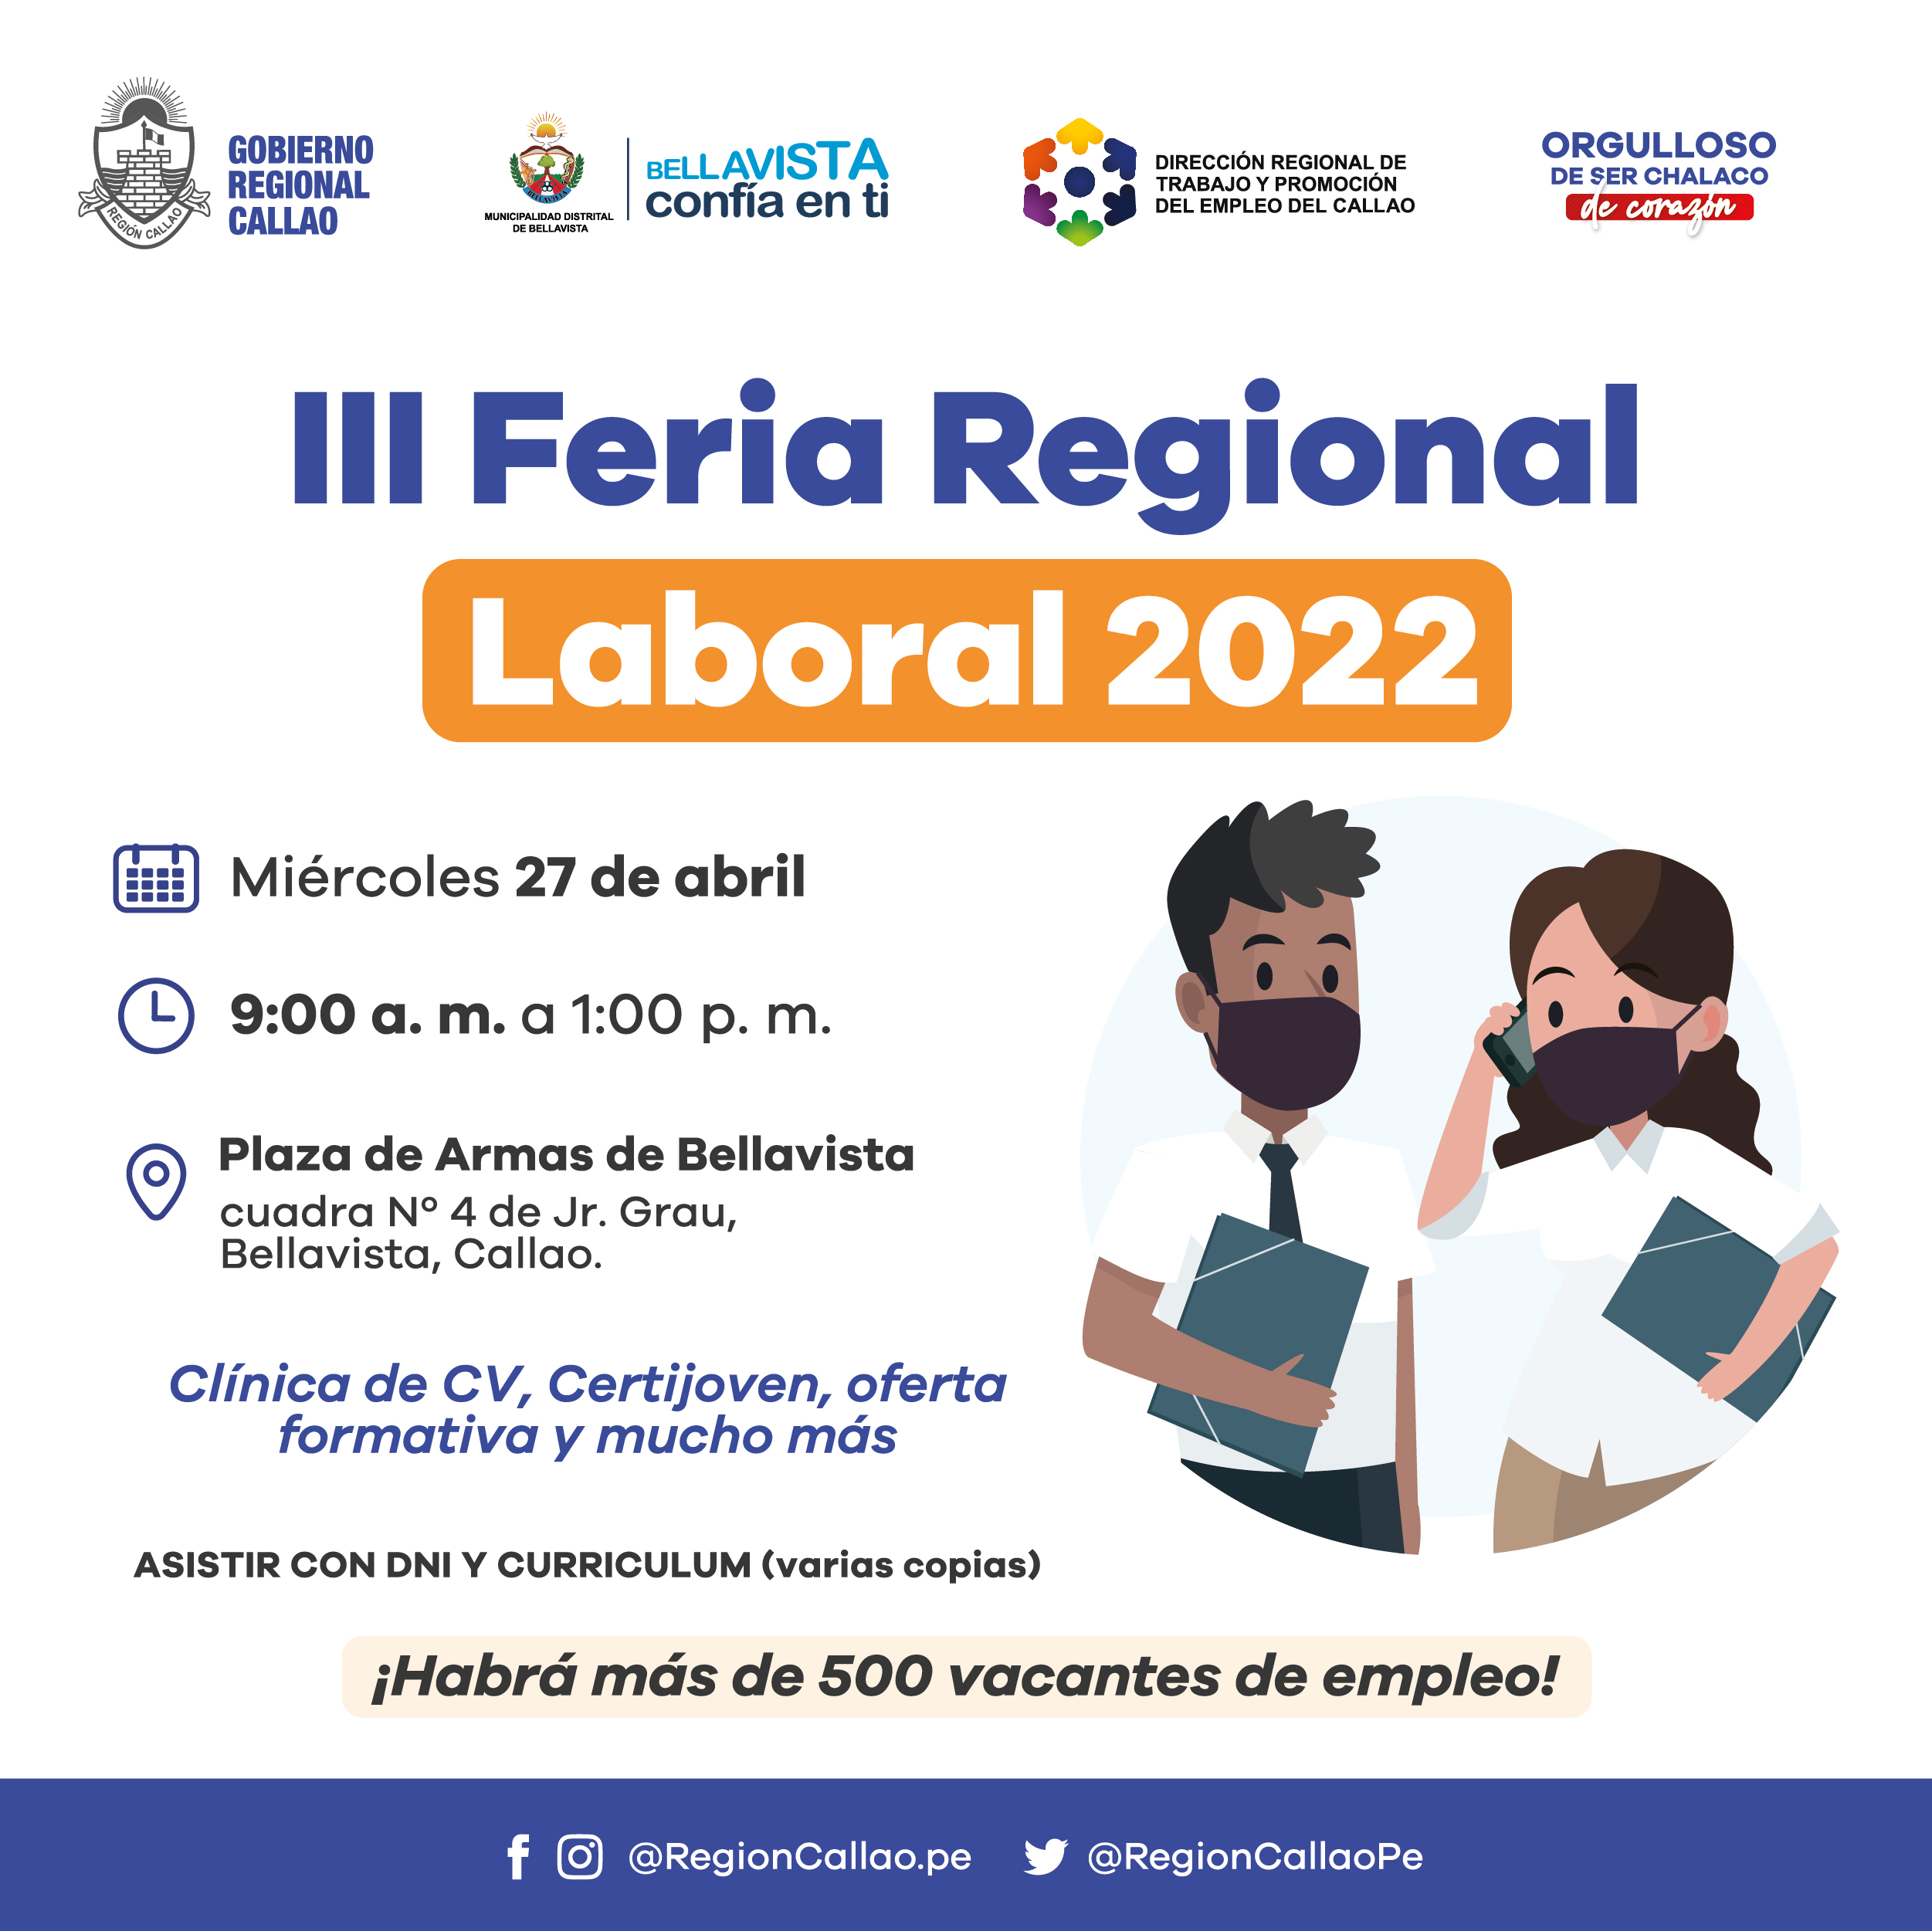 III FERIA REGIONAL LABORAL 2022